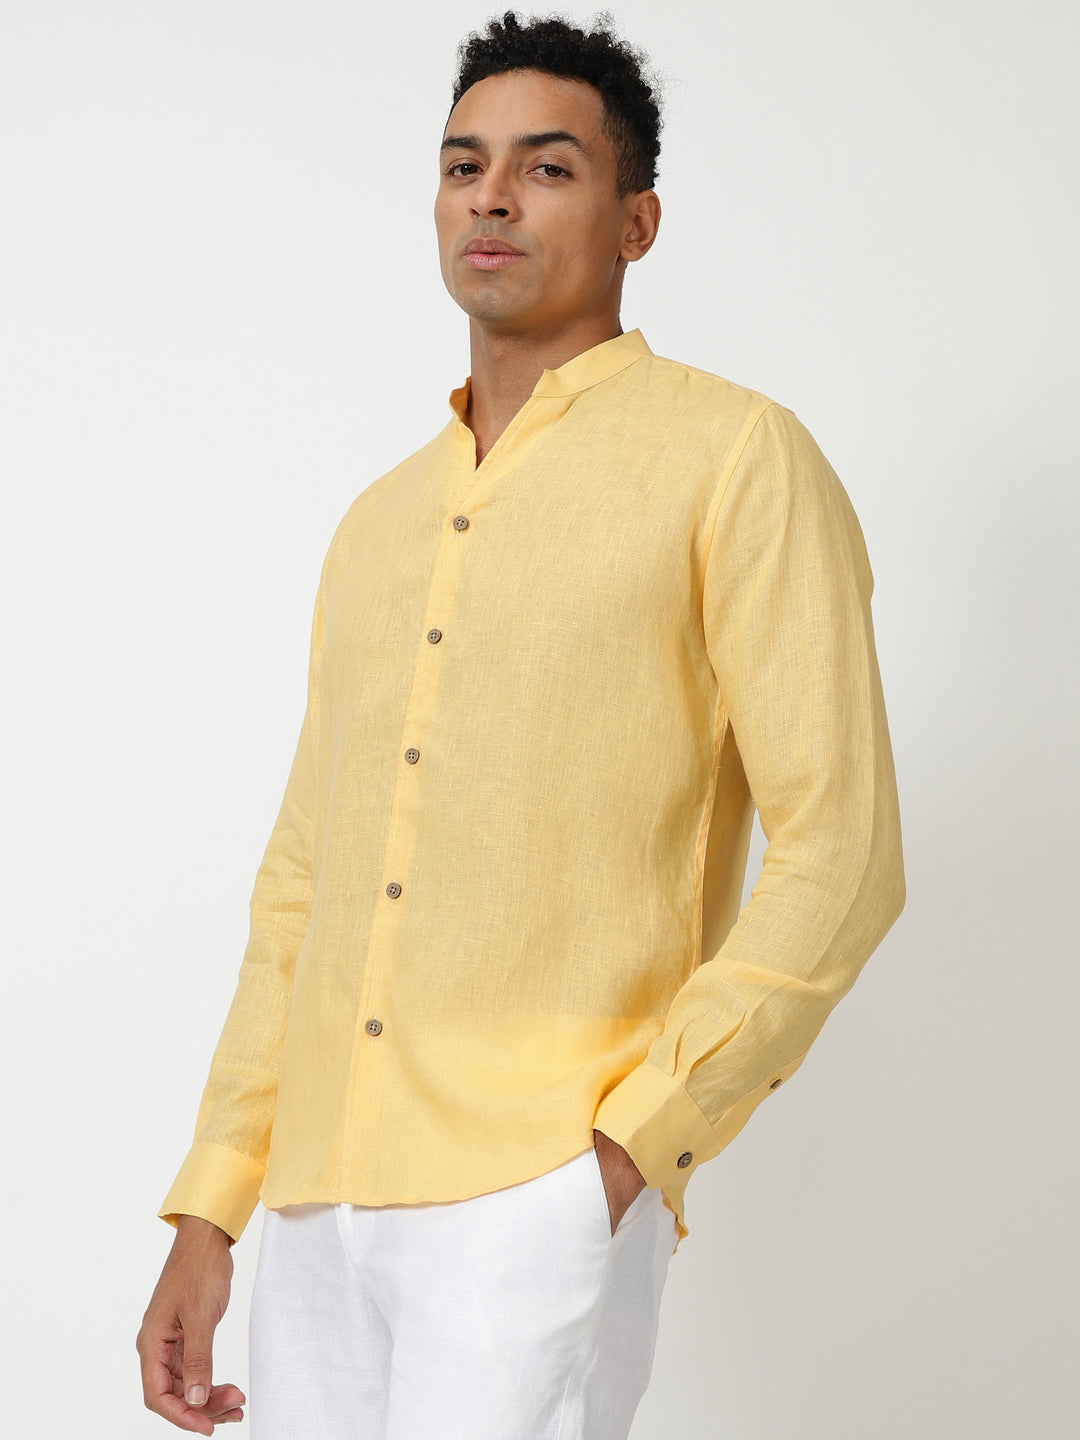 Craig - Pure Linen V Neck Full Sleeve Shirt - Spectra Yellow